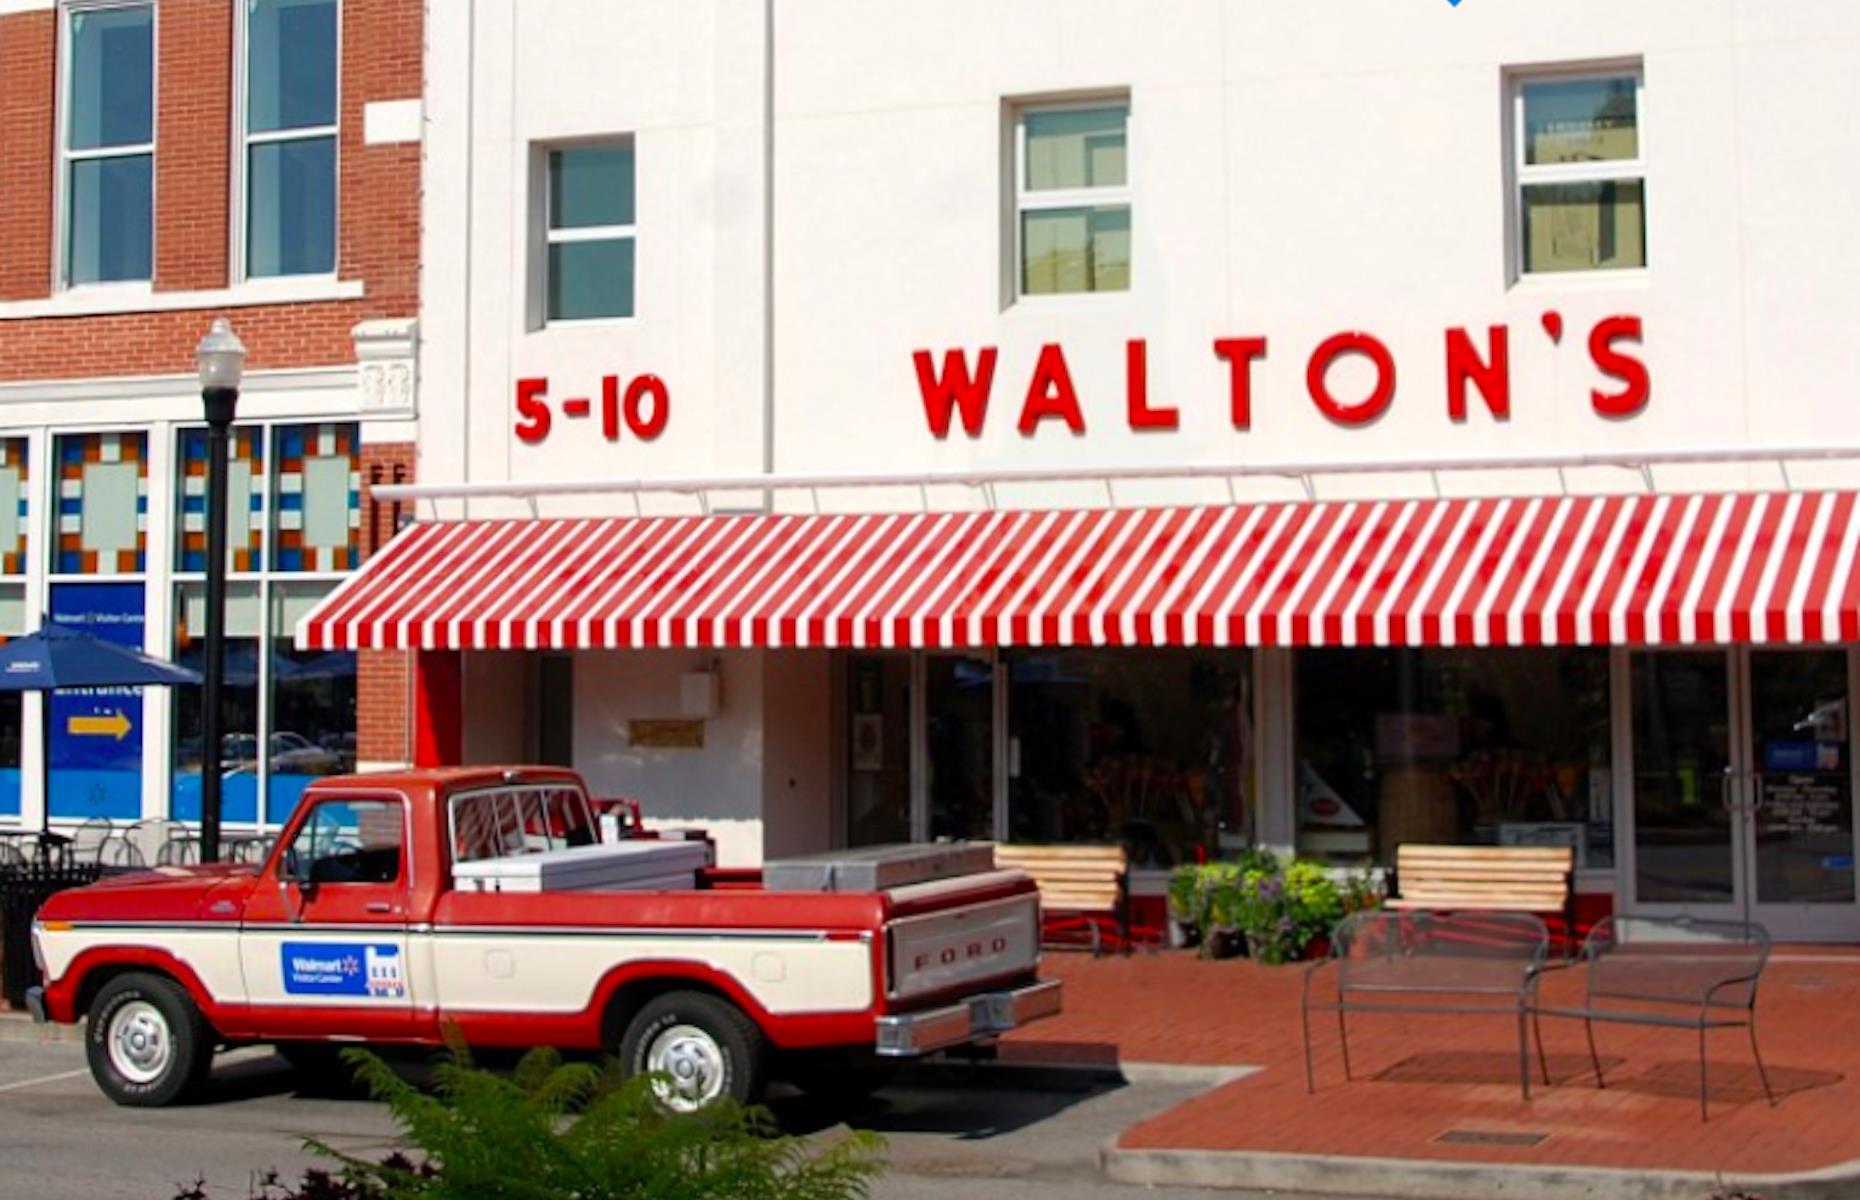 What began as Walton's became global giant Walmart